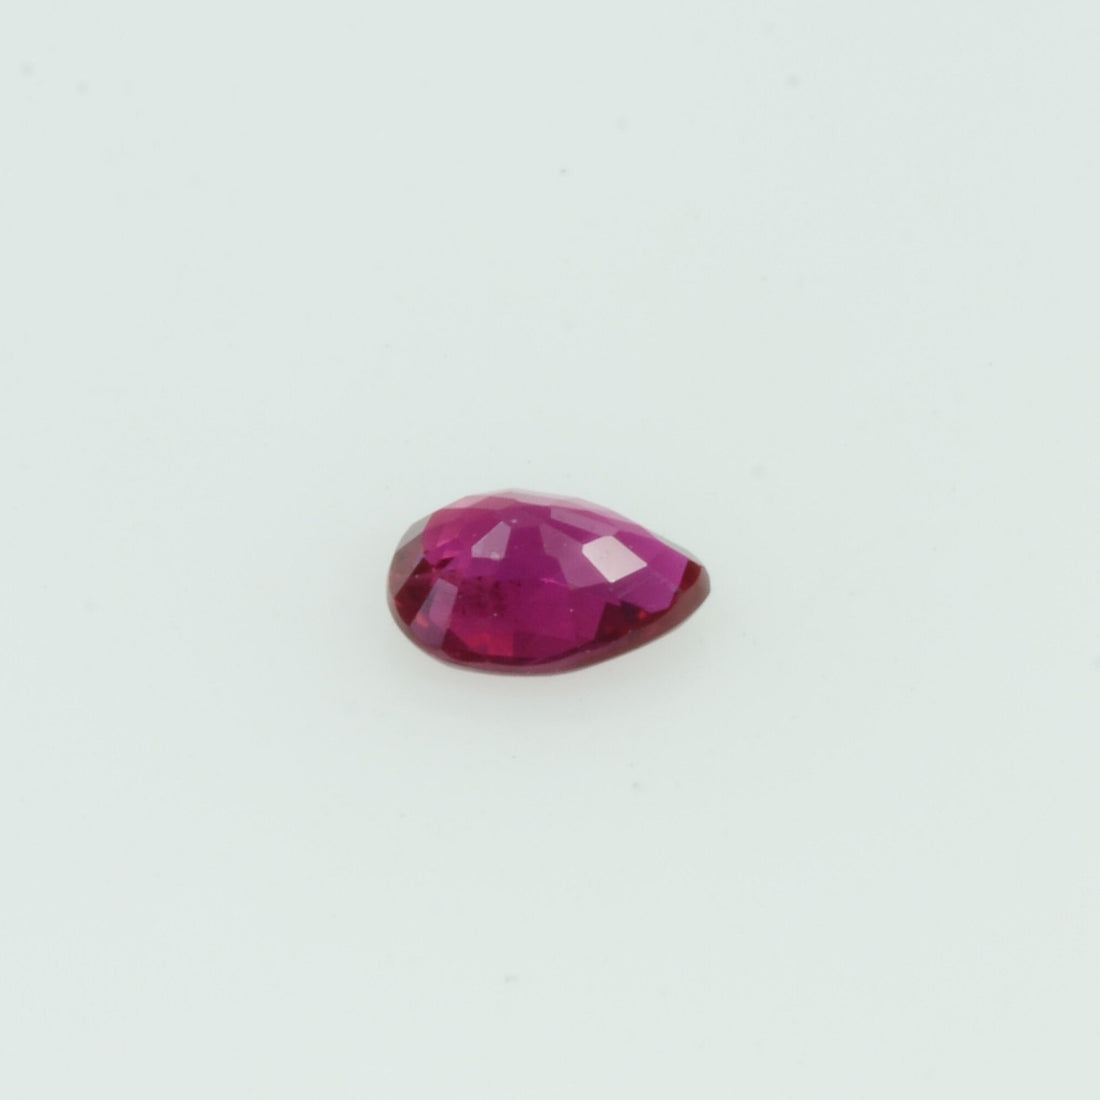 0.15 Cts Natural Ruby Loose Gemstone Pear Cut